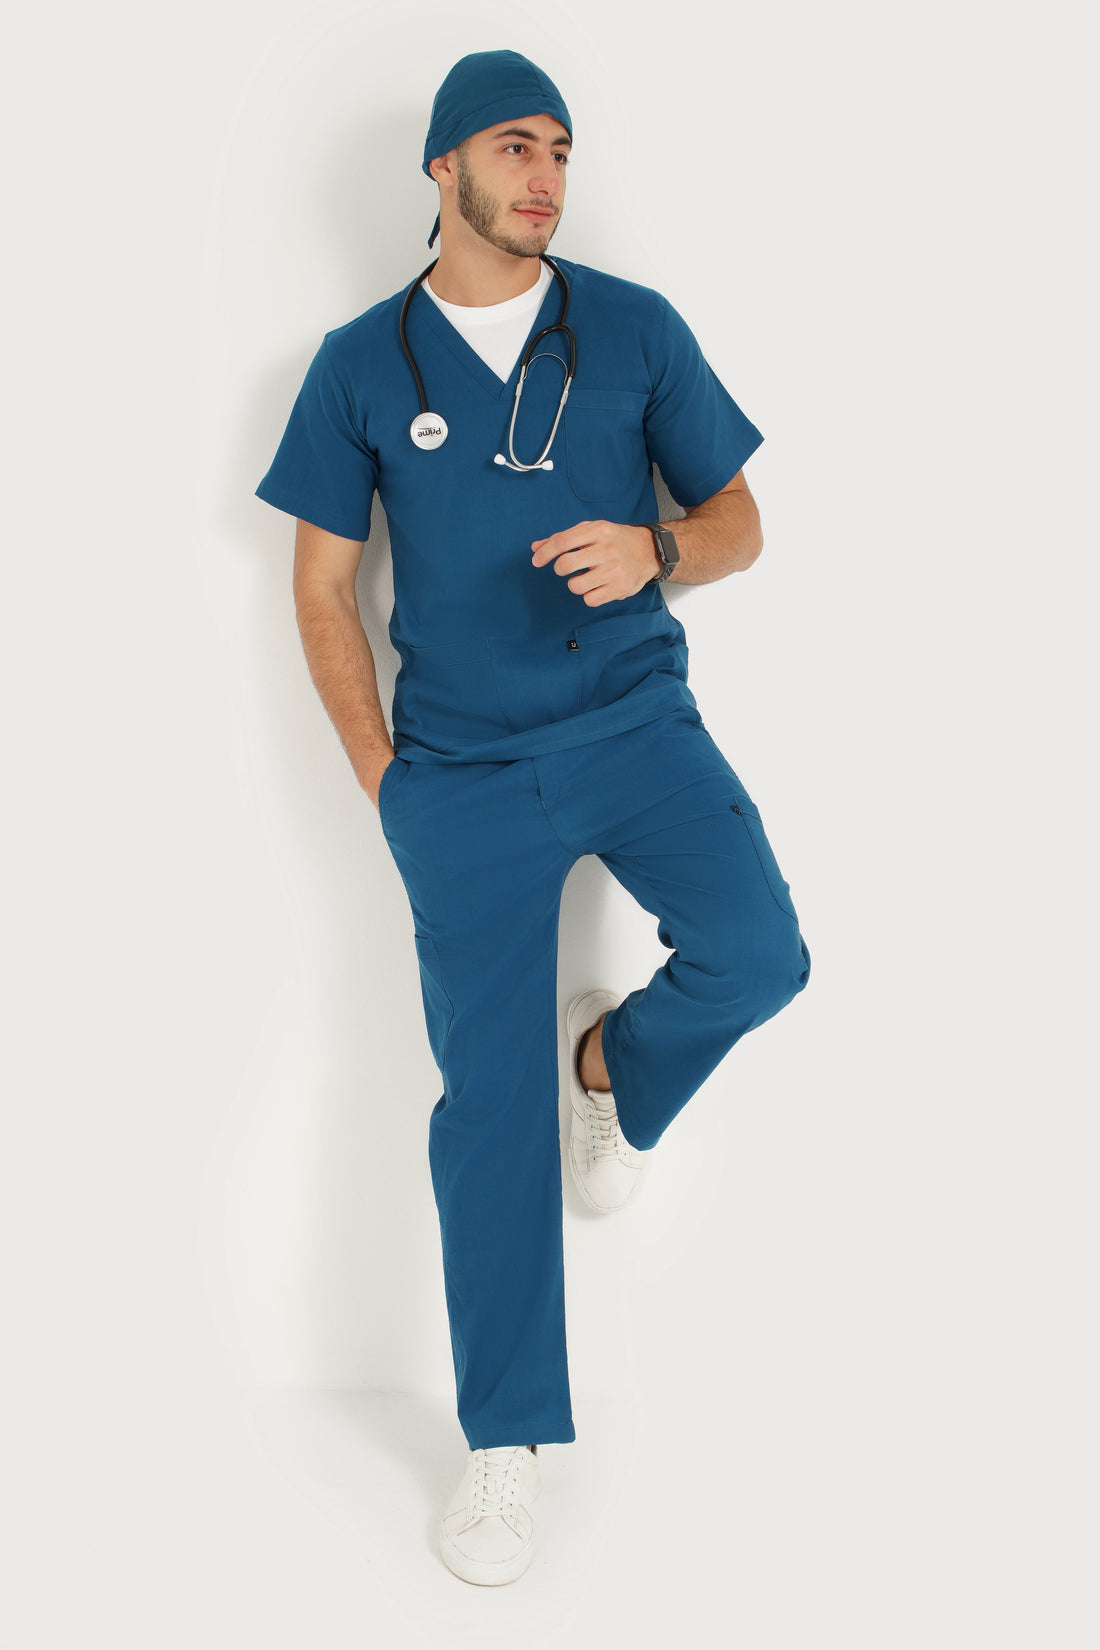 Dr. Flexi Medical Uniforms Line for Men